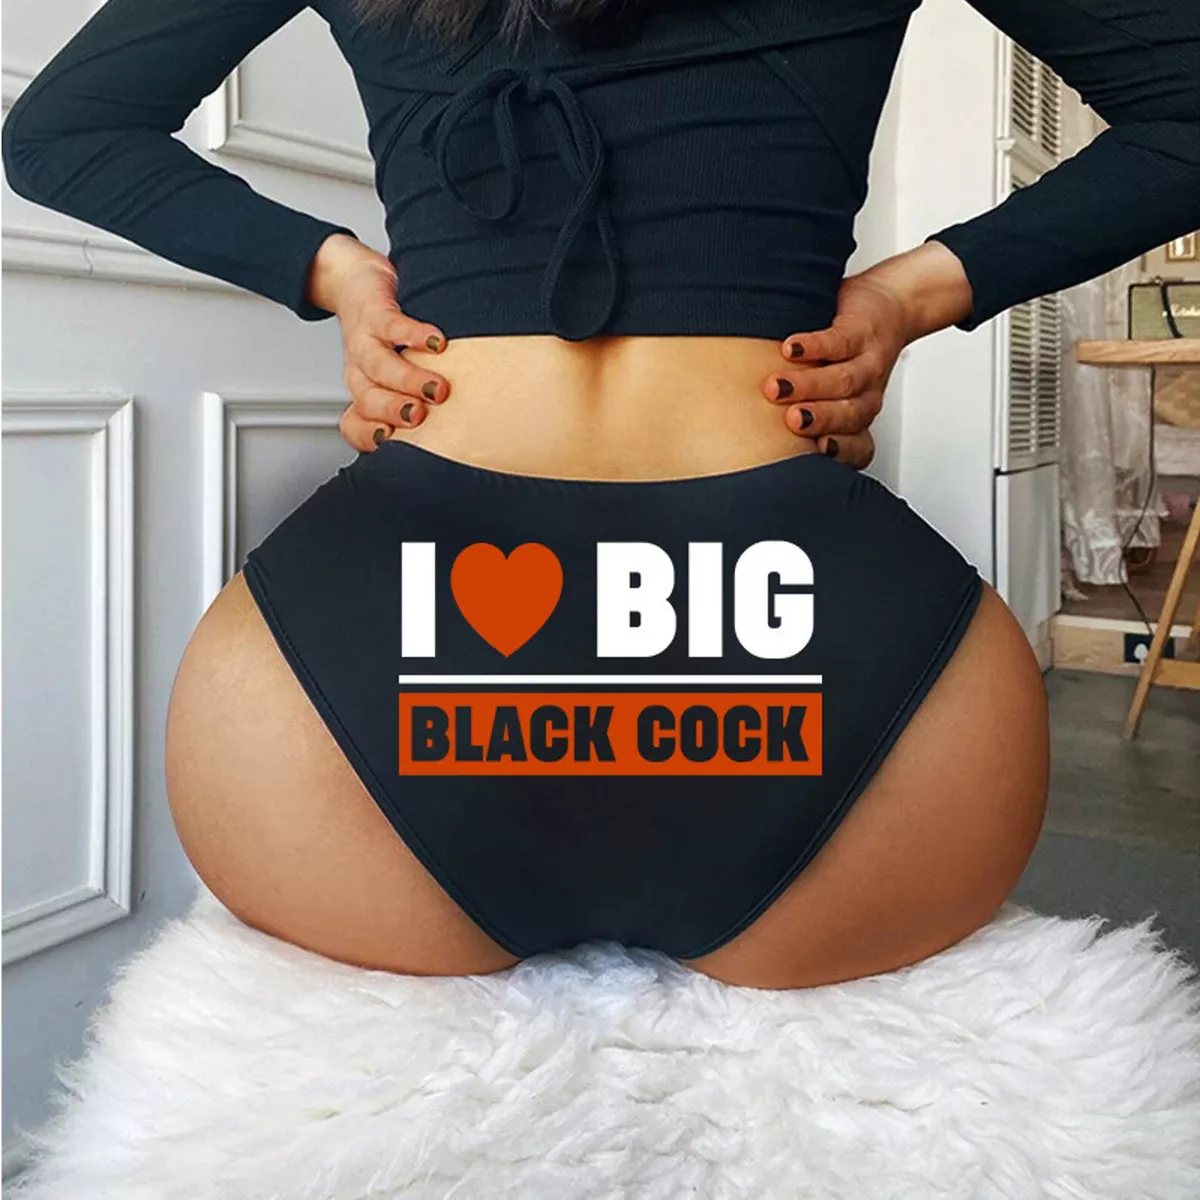 archangel chamuel recommends Women Who Love Black Dick